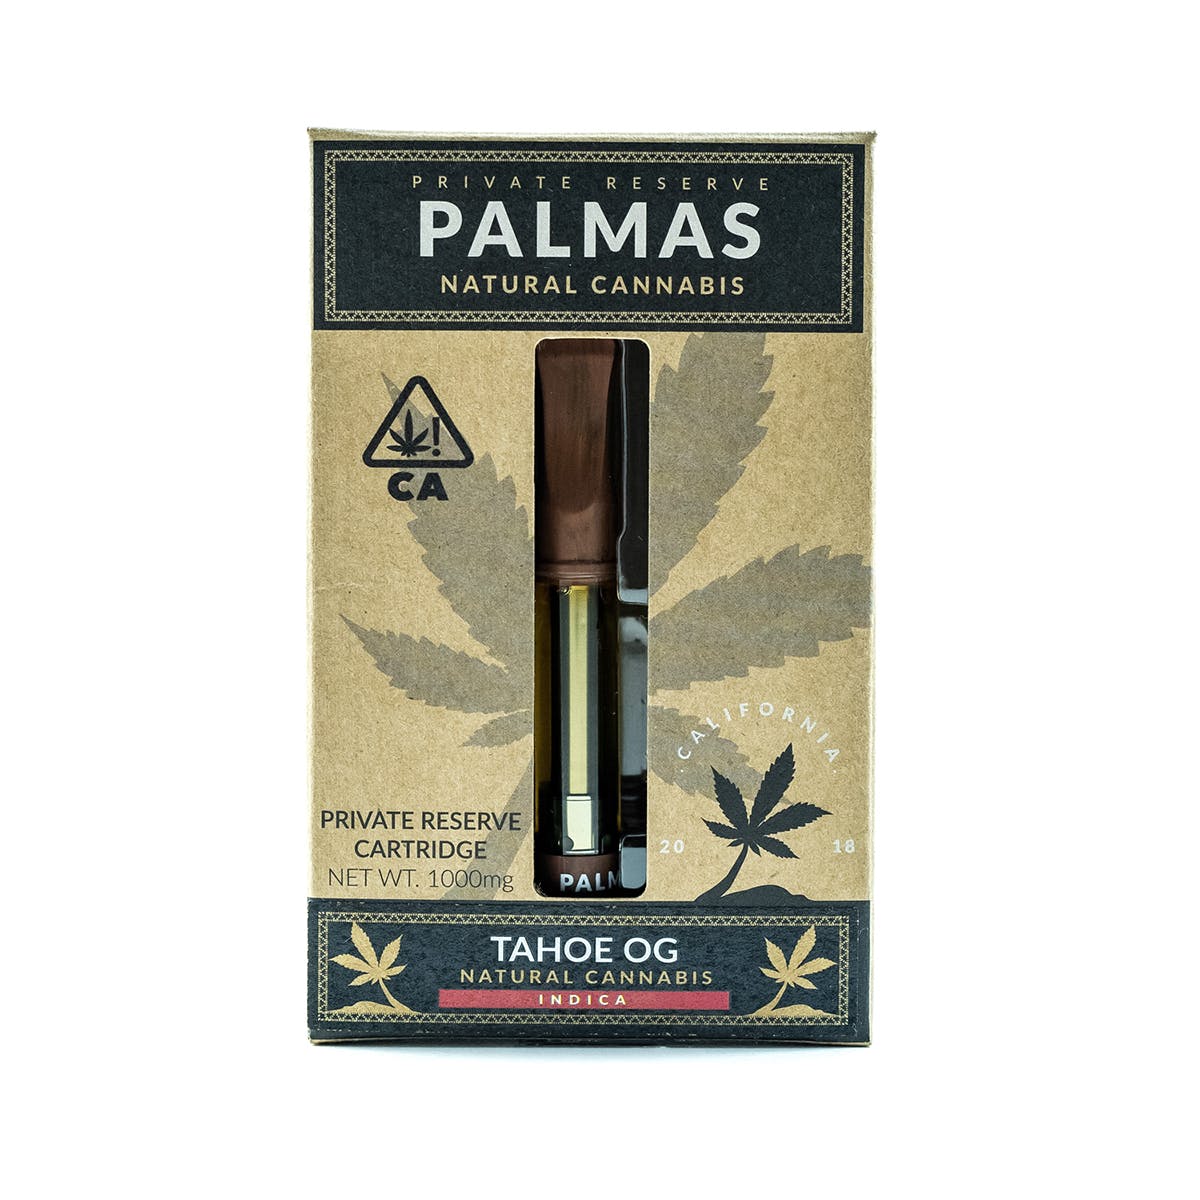 concentrate-palmas-cannabis-palmas-private-reserve-cartridge-tahoe-og